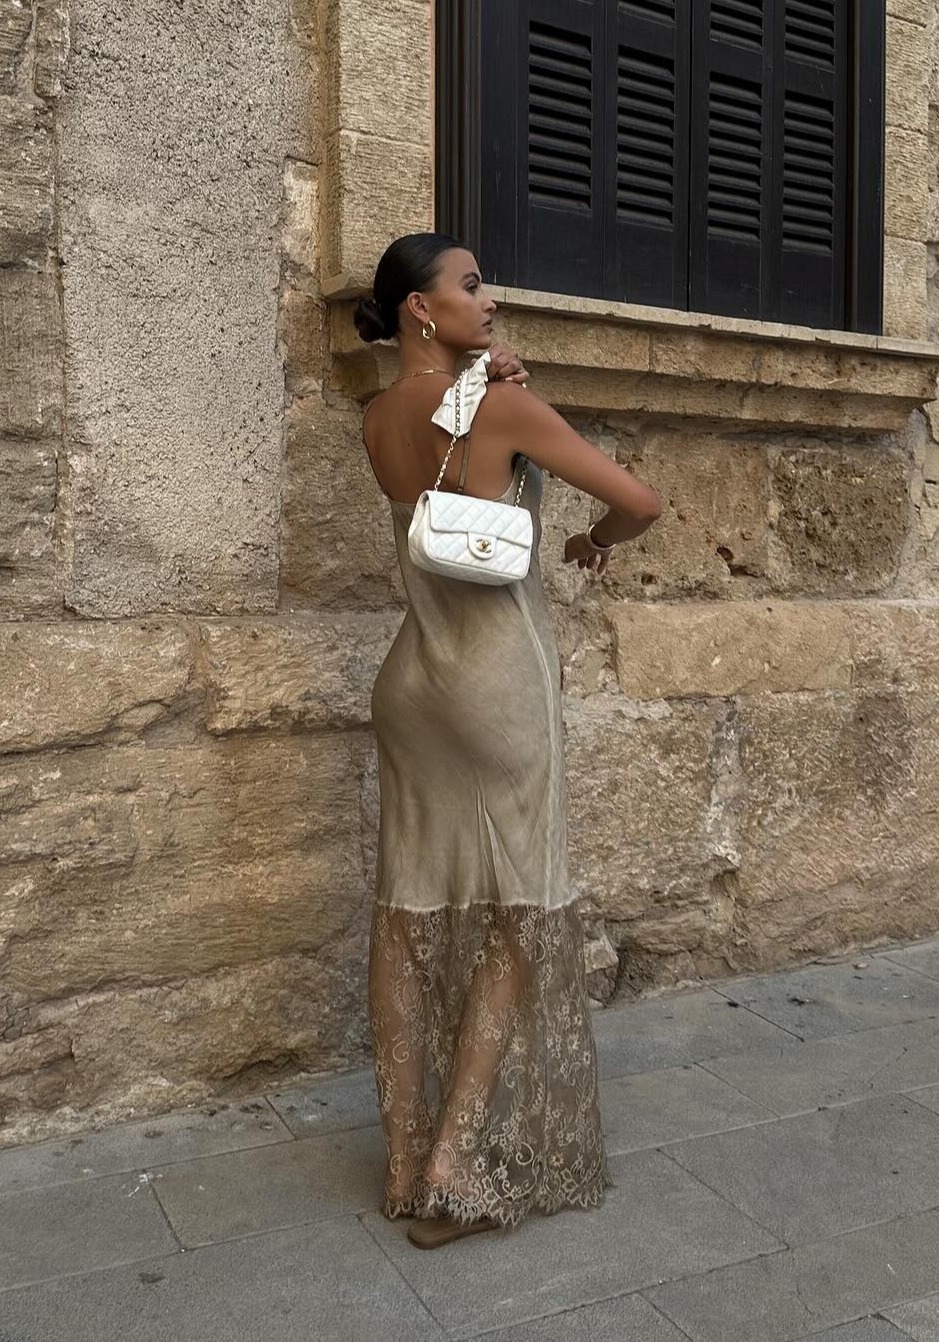 She's regularly spotted wearing designer handbags like her classic Chanel mini and Fendi baguette bag